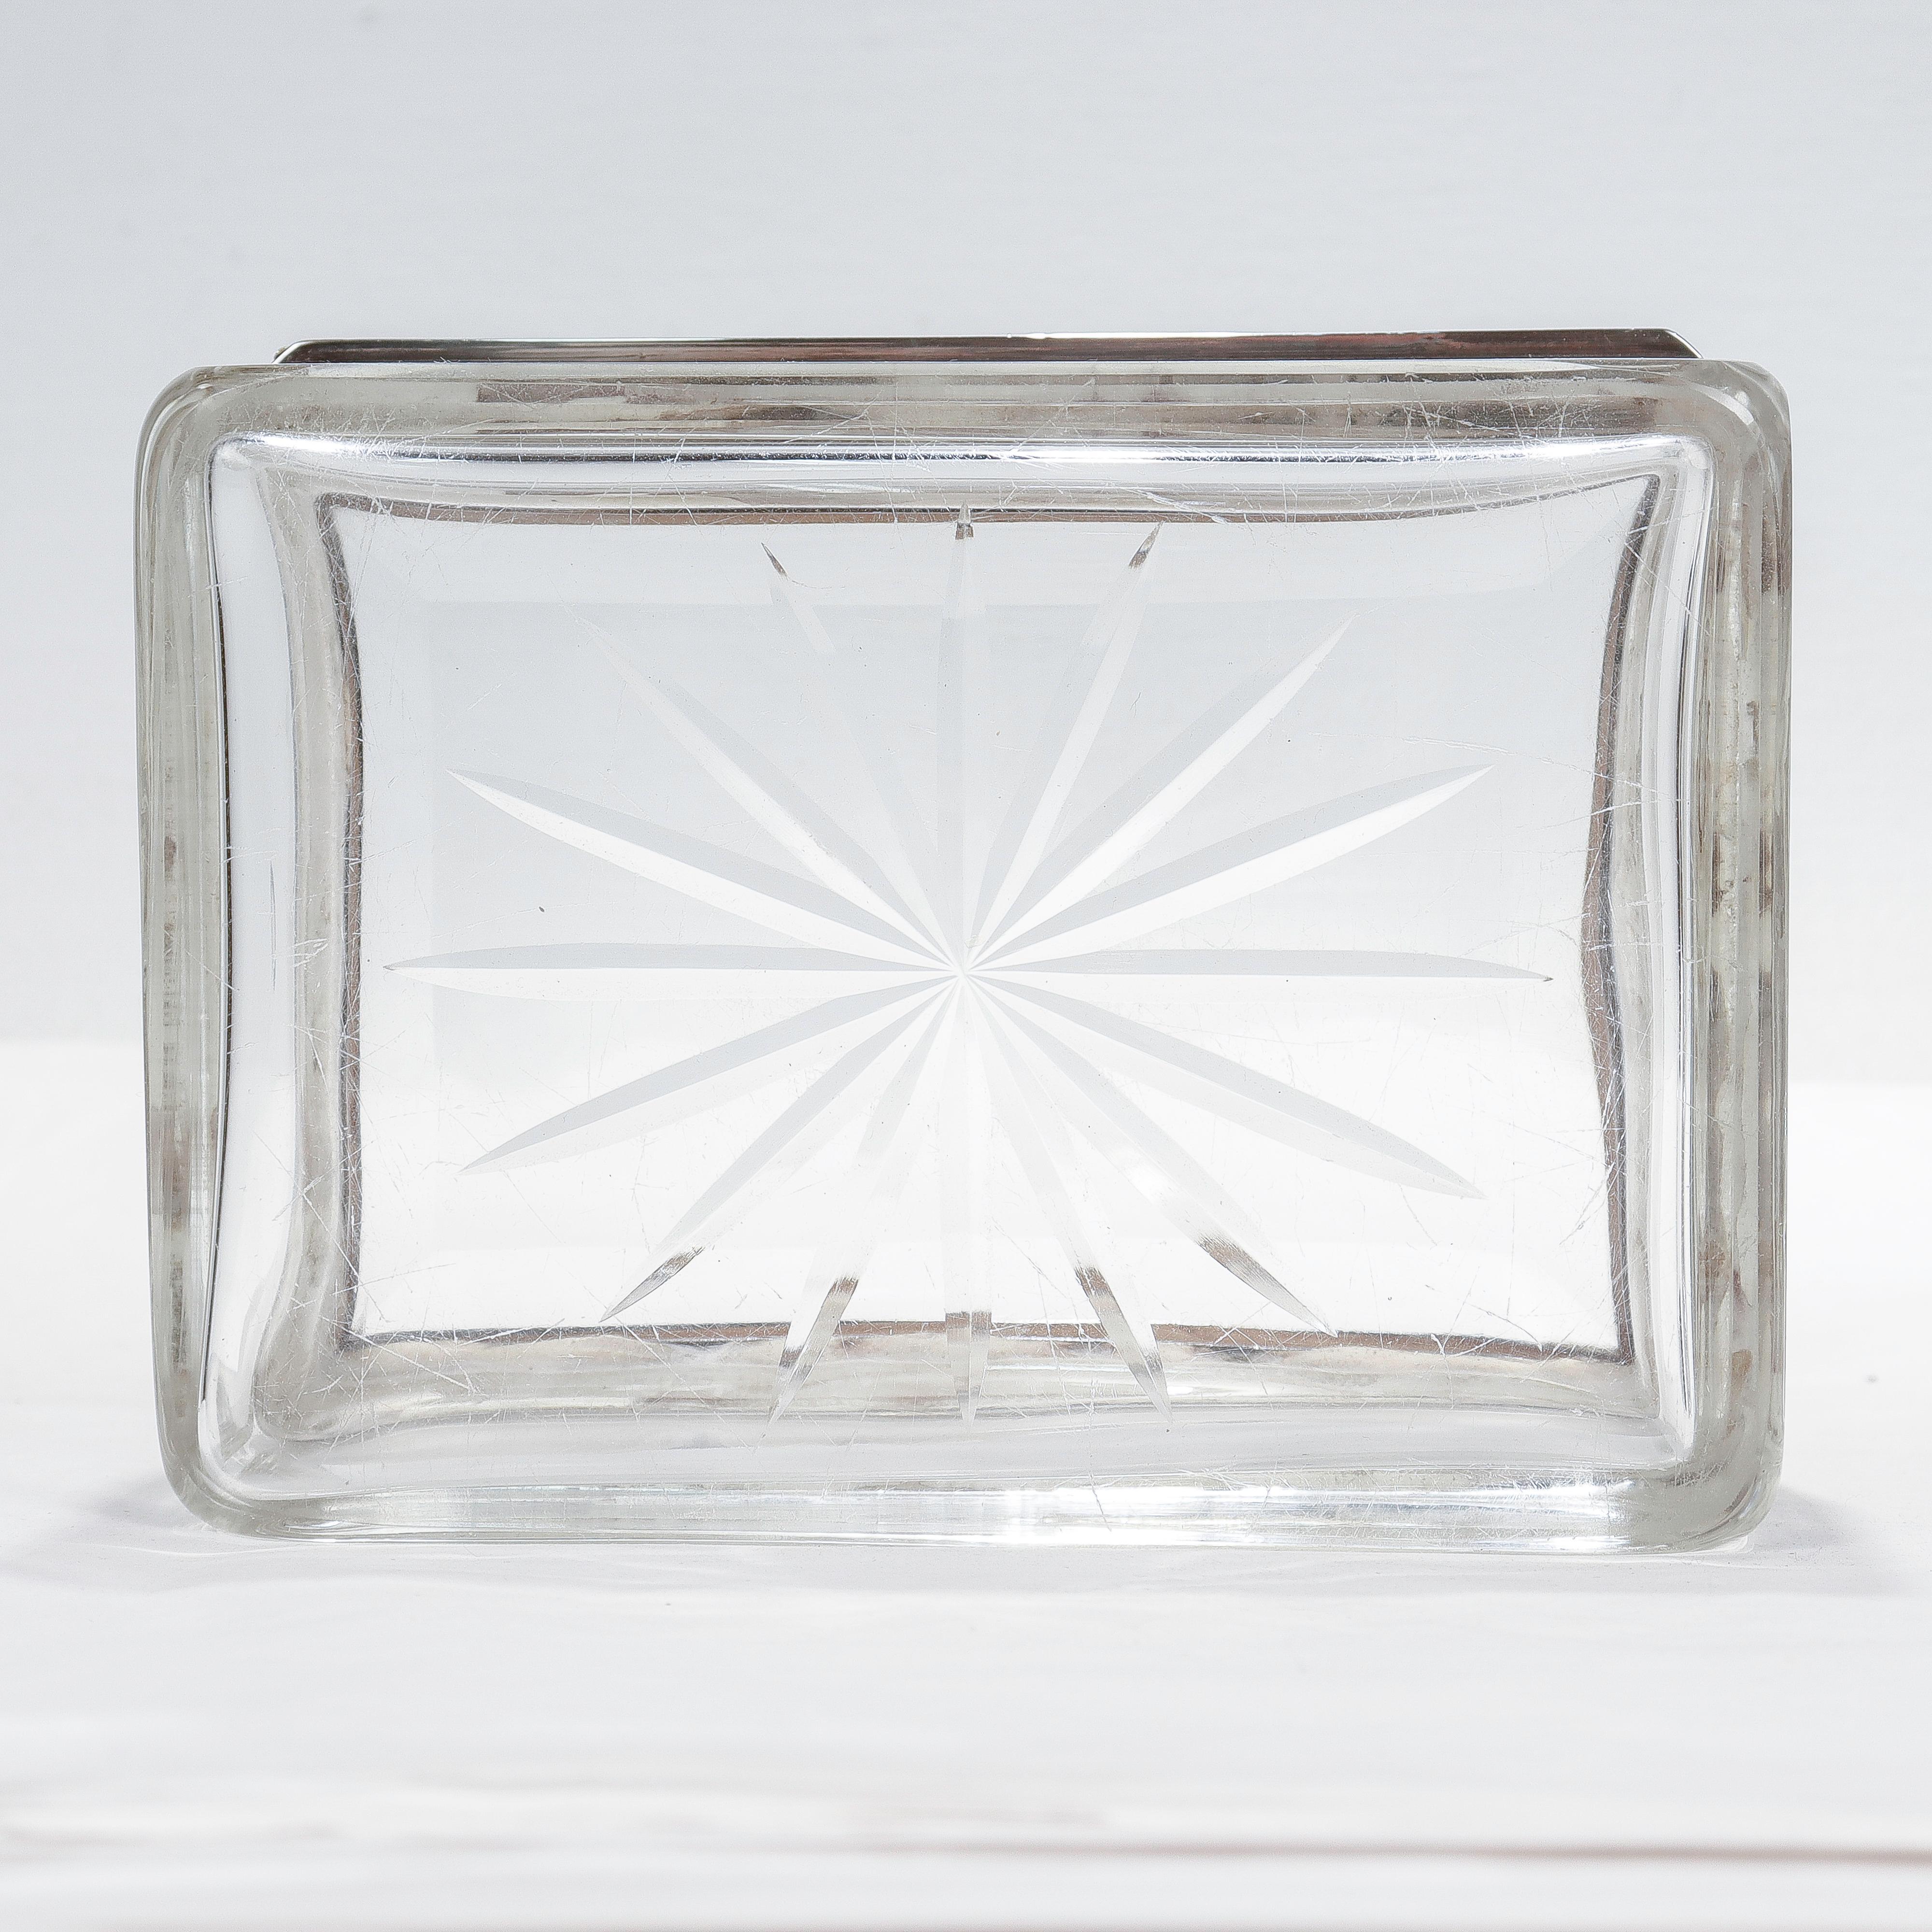 Austrian Art Deco Silver Plate & Cut Glass Casket or Table Box For Sale 6